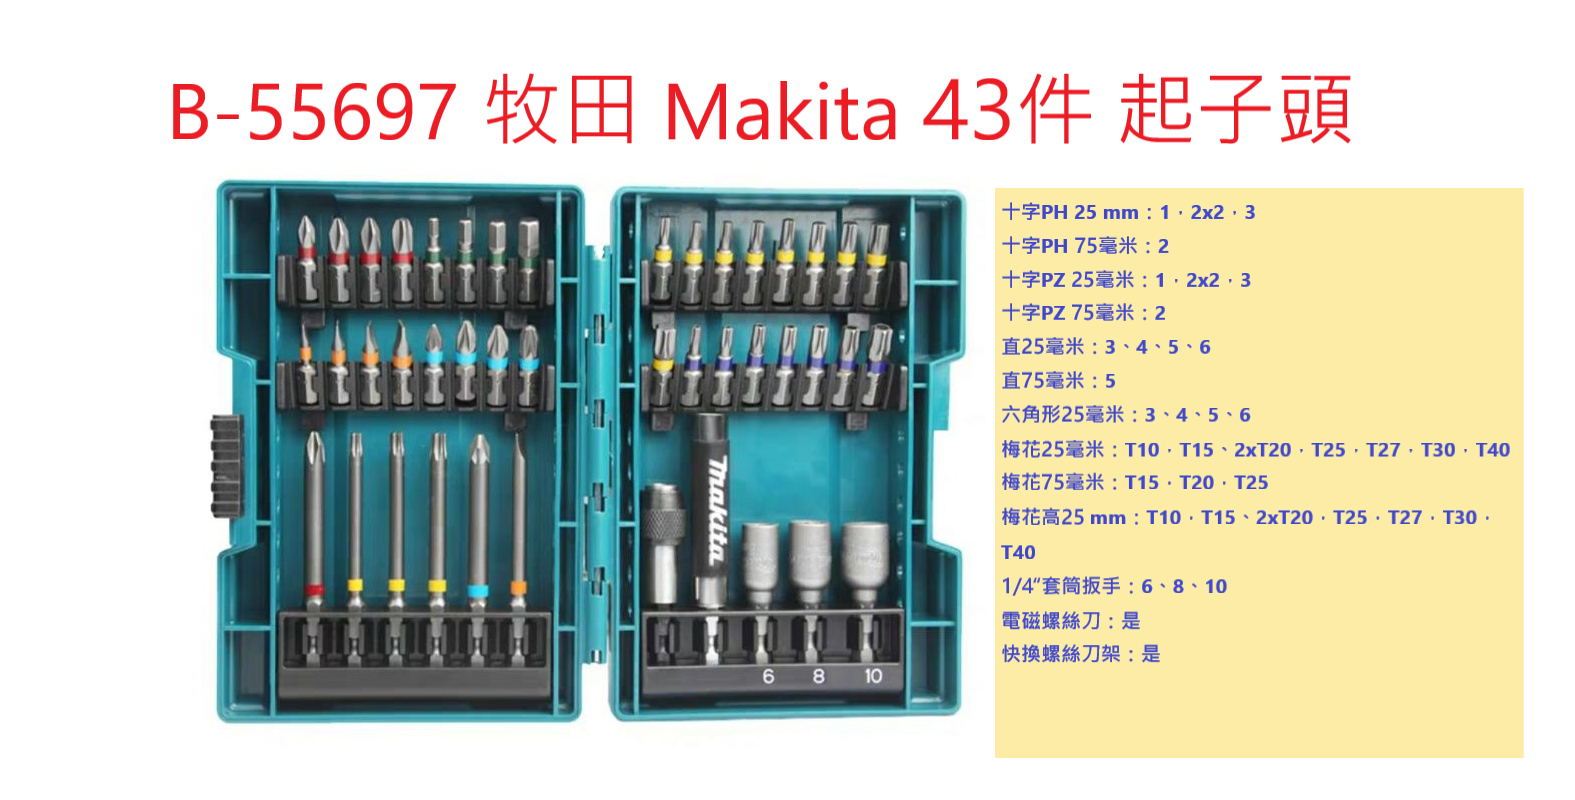  Makita 牧田 B55697 螺絲起子頭 43支 零件組合